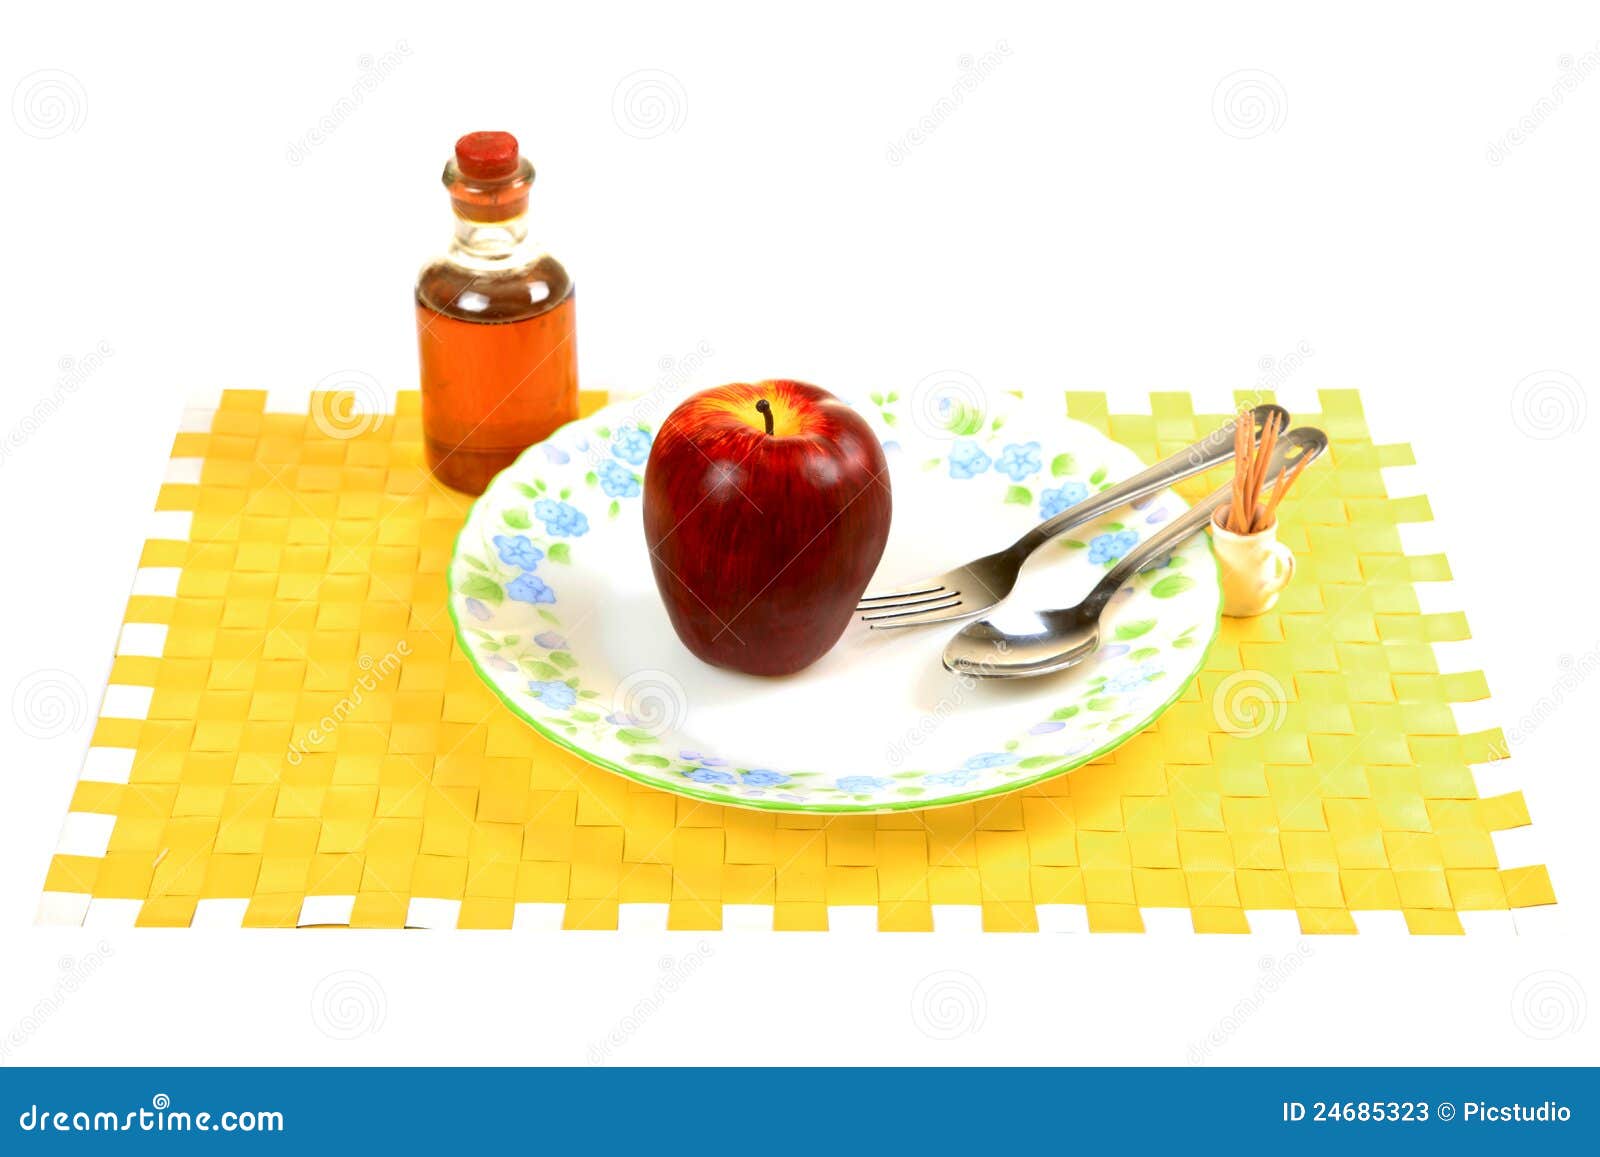 Apple diet stock image. Image of diet, white, fruit, plate - 24685323